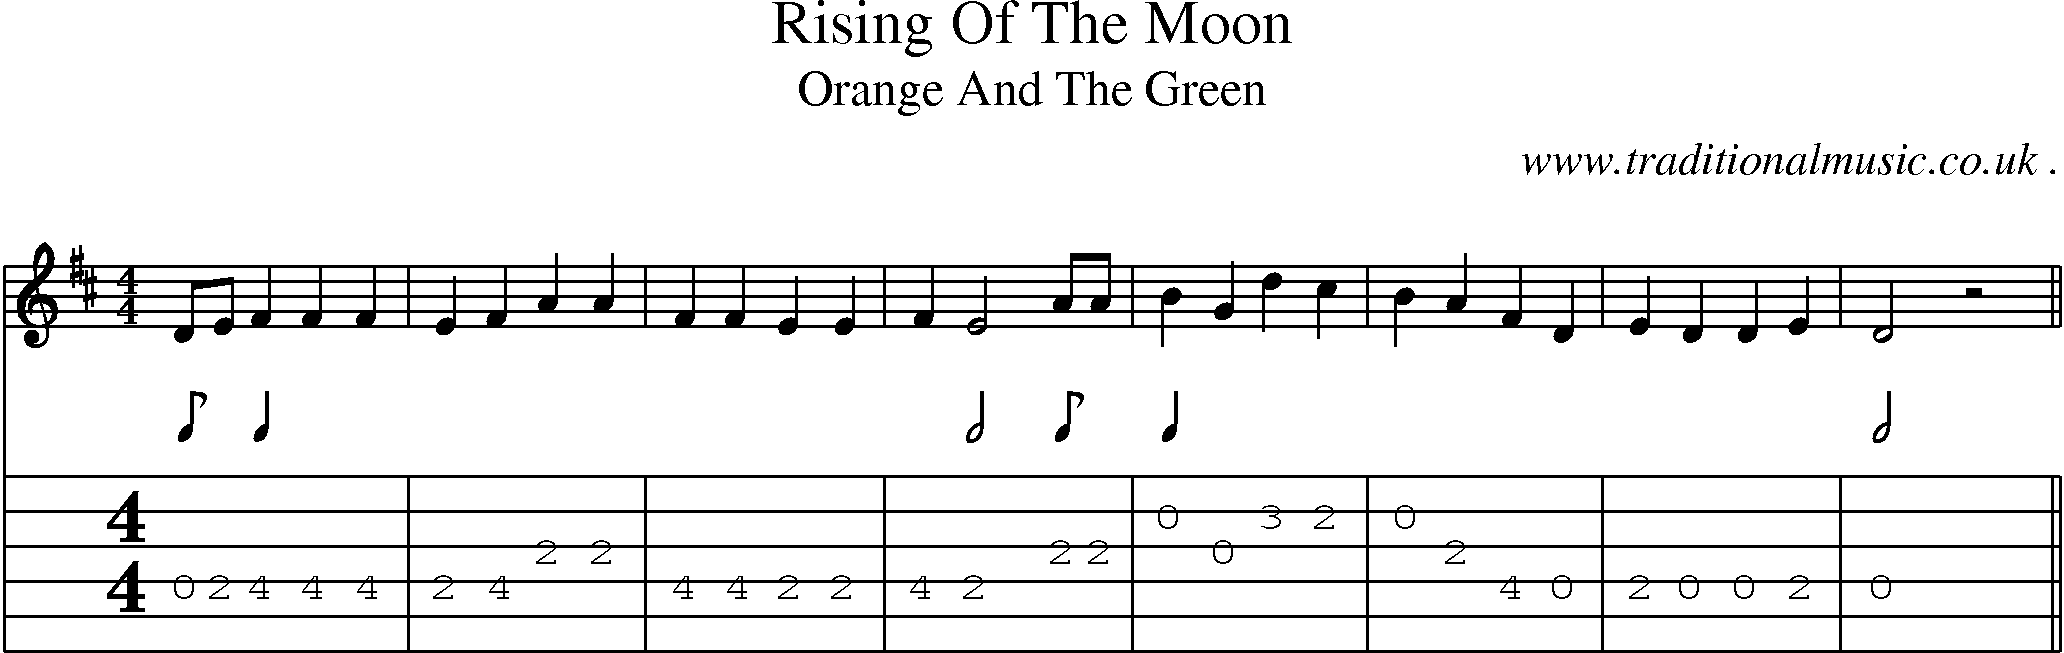 Guitar tab rises the moon chords